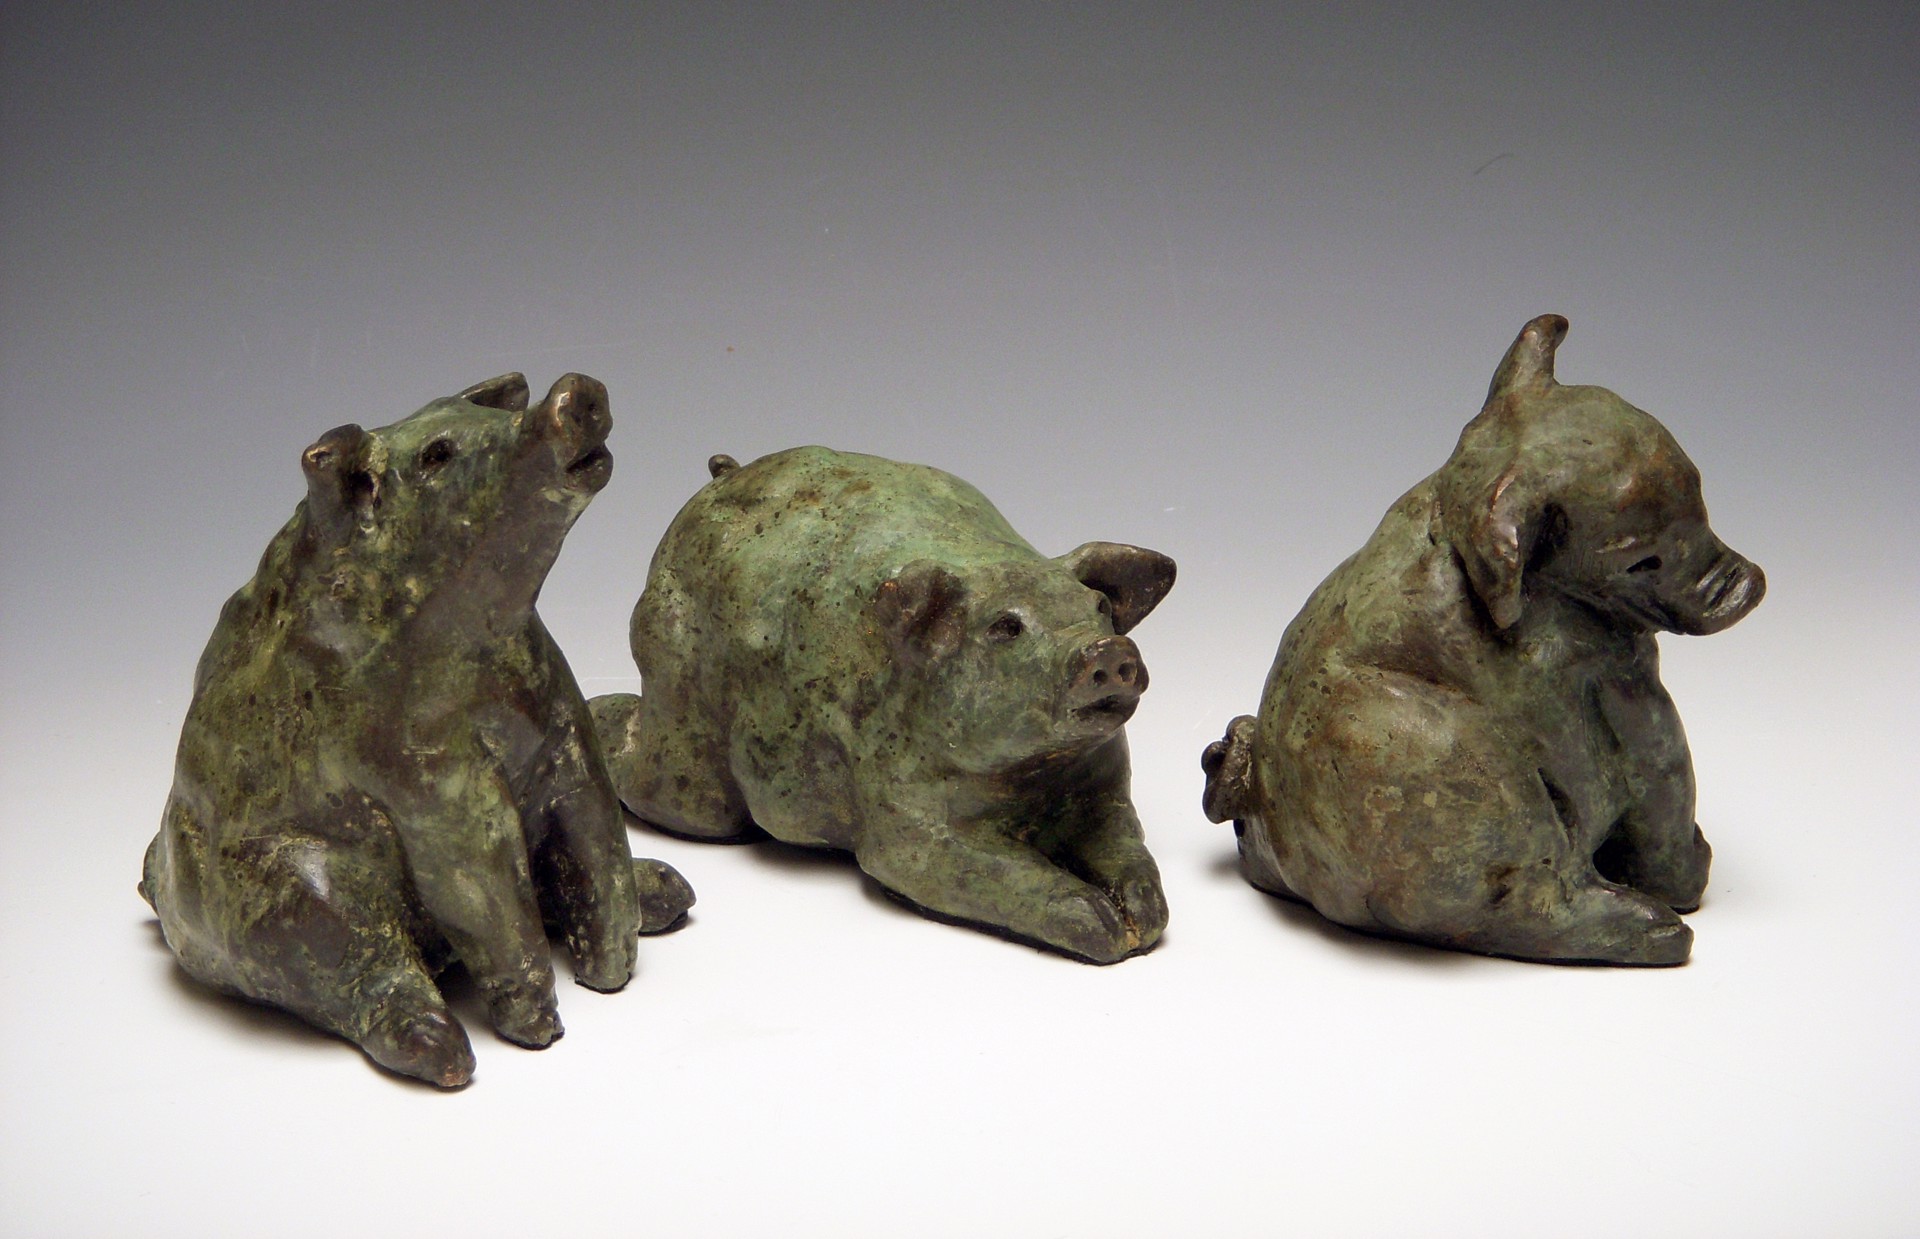 3 Moss Piggies ($625 per piece) by Kari Rives